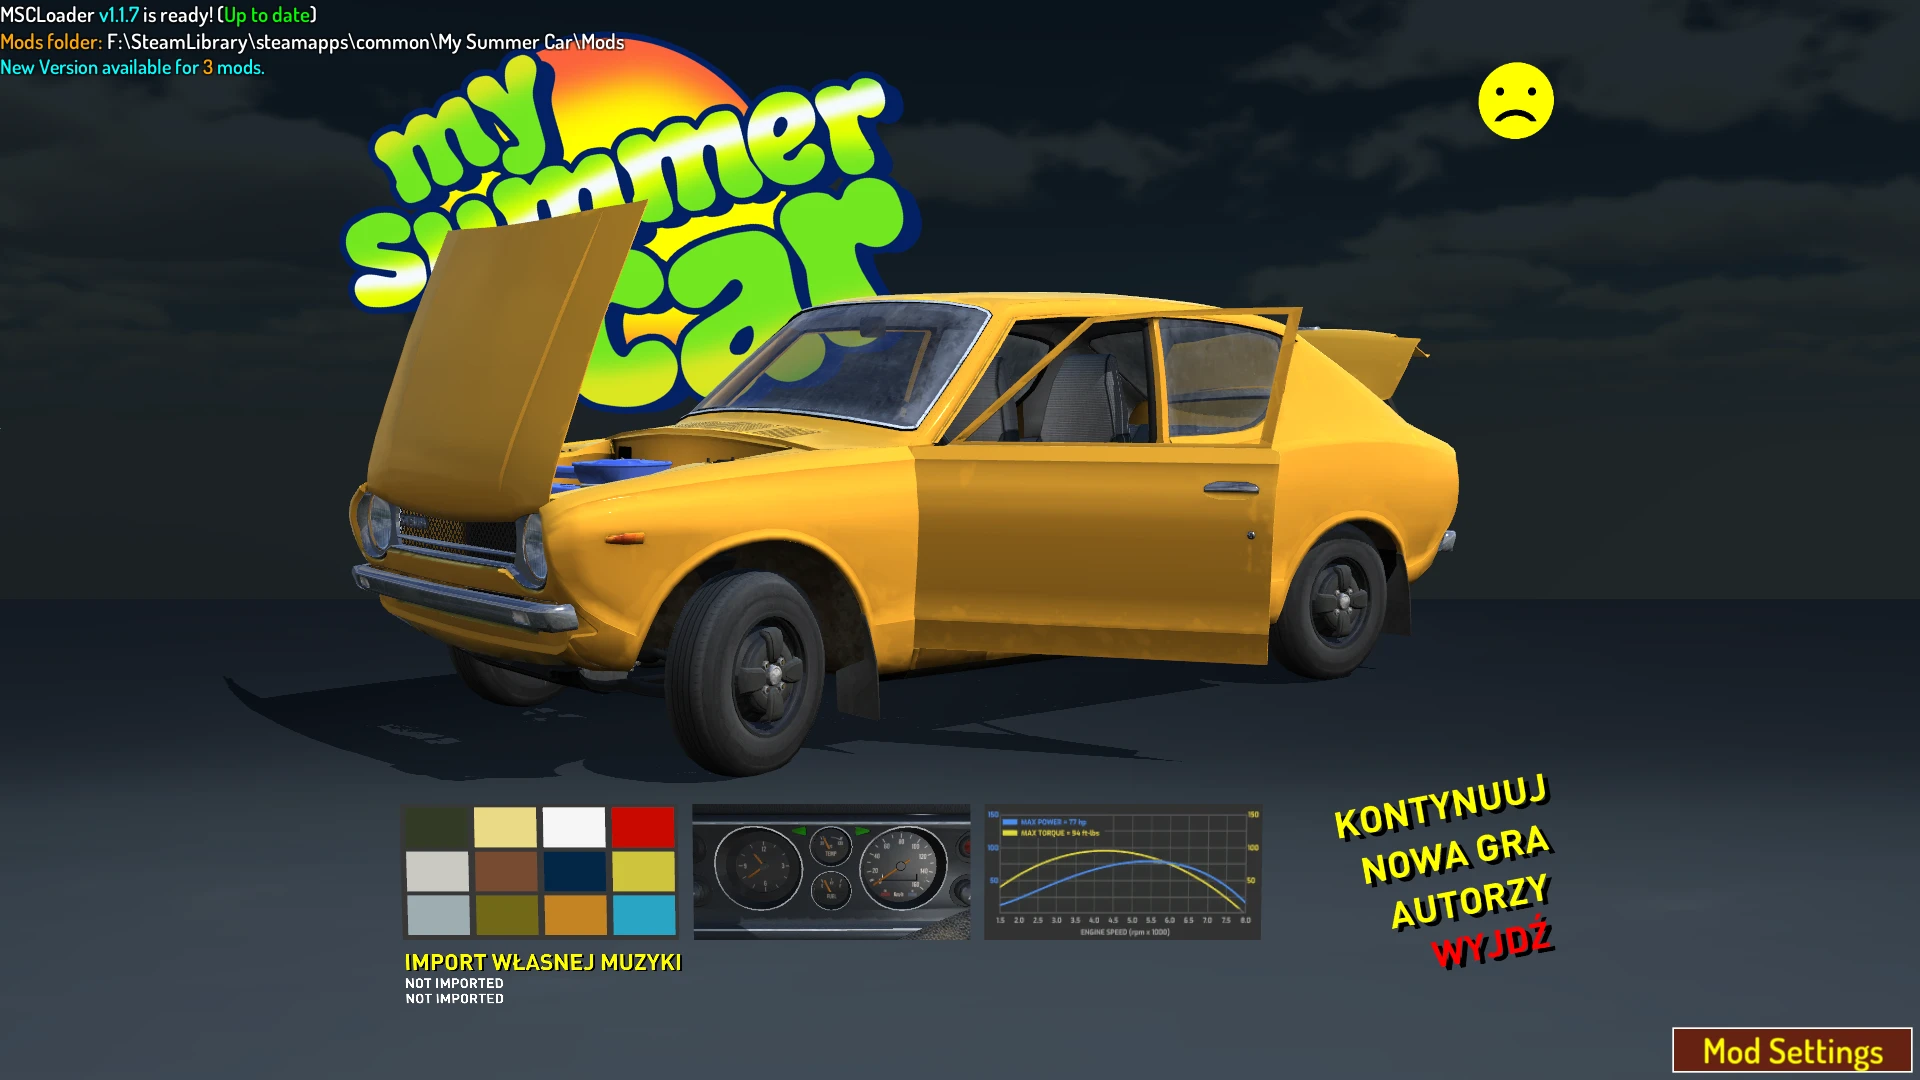 Май саммер кар русификатор текста. MSC Loader my Summer car. CHEATBOX my Summer car на русском. Масемеркар MSC Mod Loader. My Summer car читы.